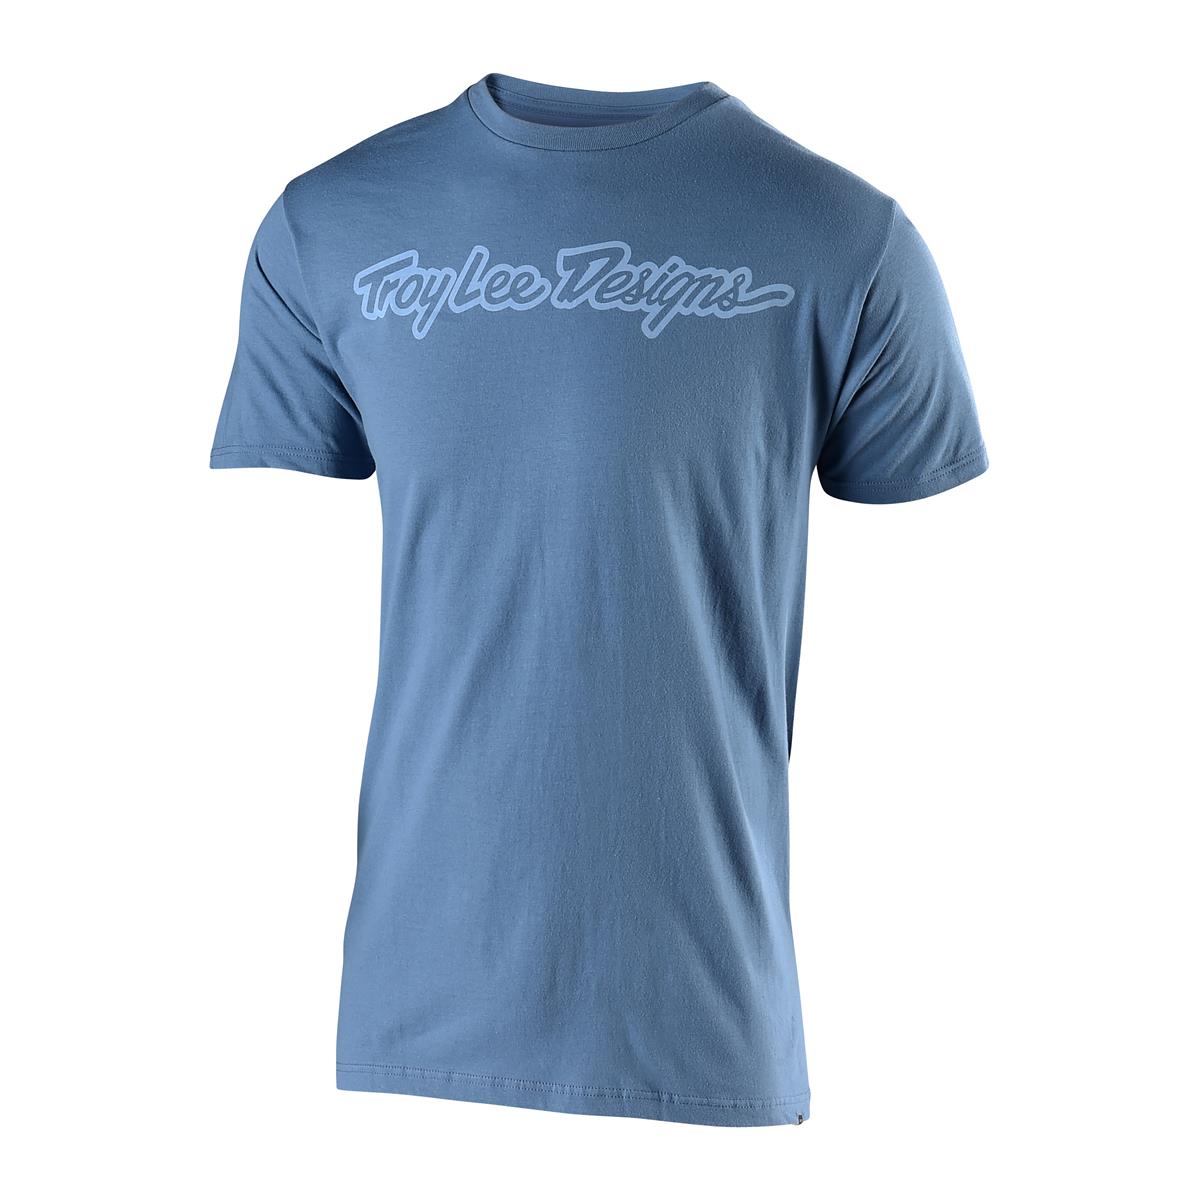 Troy Lee Designs T-Shirt Signature Steel Blue/Lilac